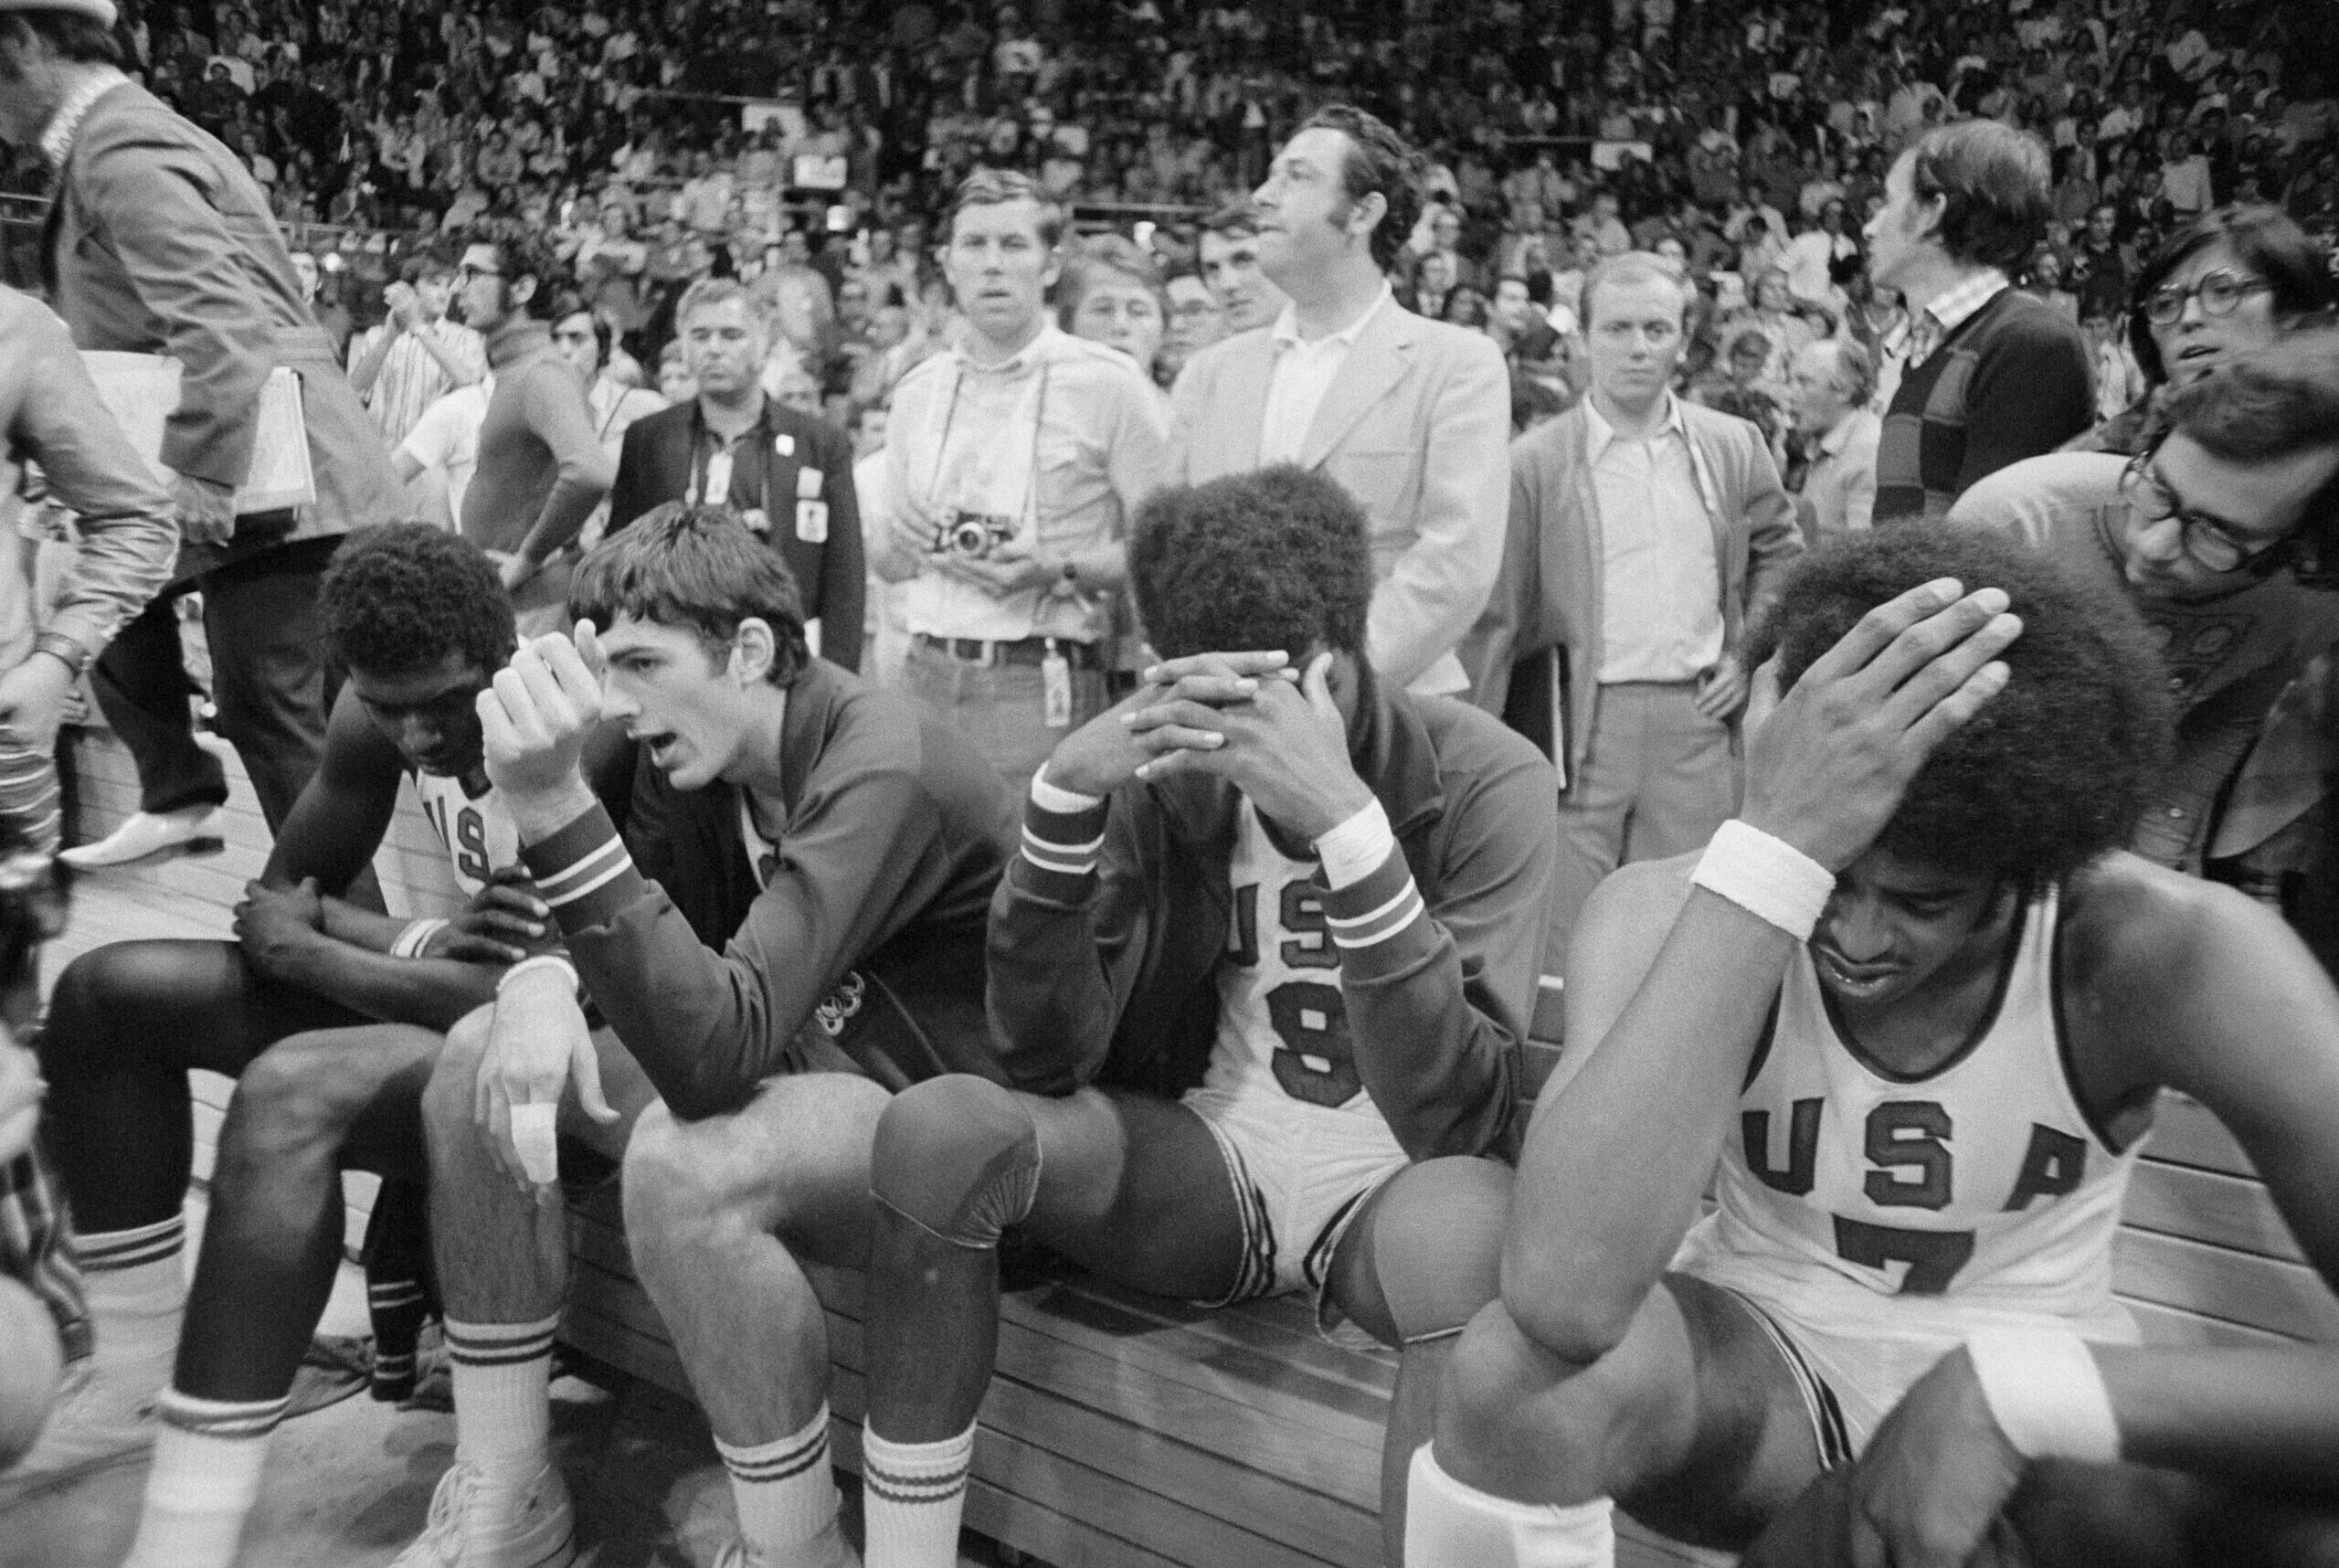 1972 Баскетбольный матч СССР США. Баскетбол Мюнхен 1972 сборная СССР. Игры 1972 баскетбол